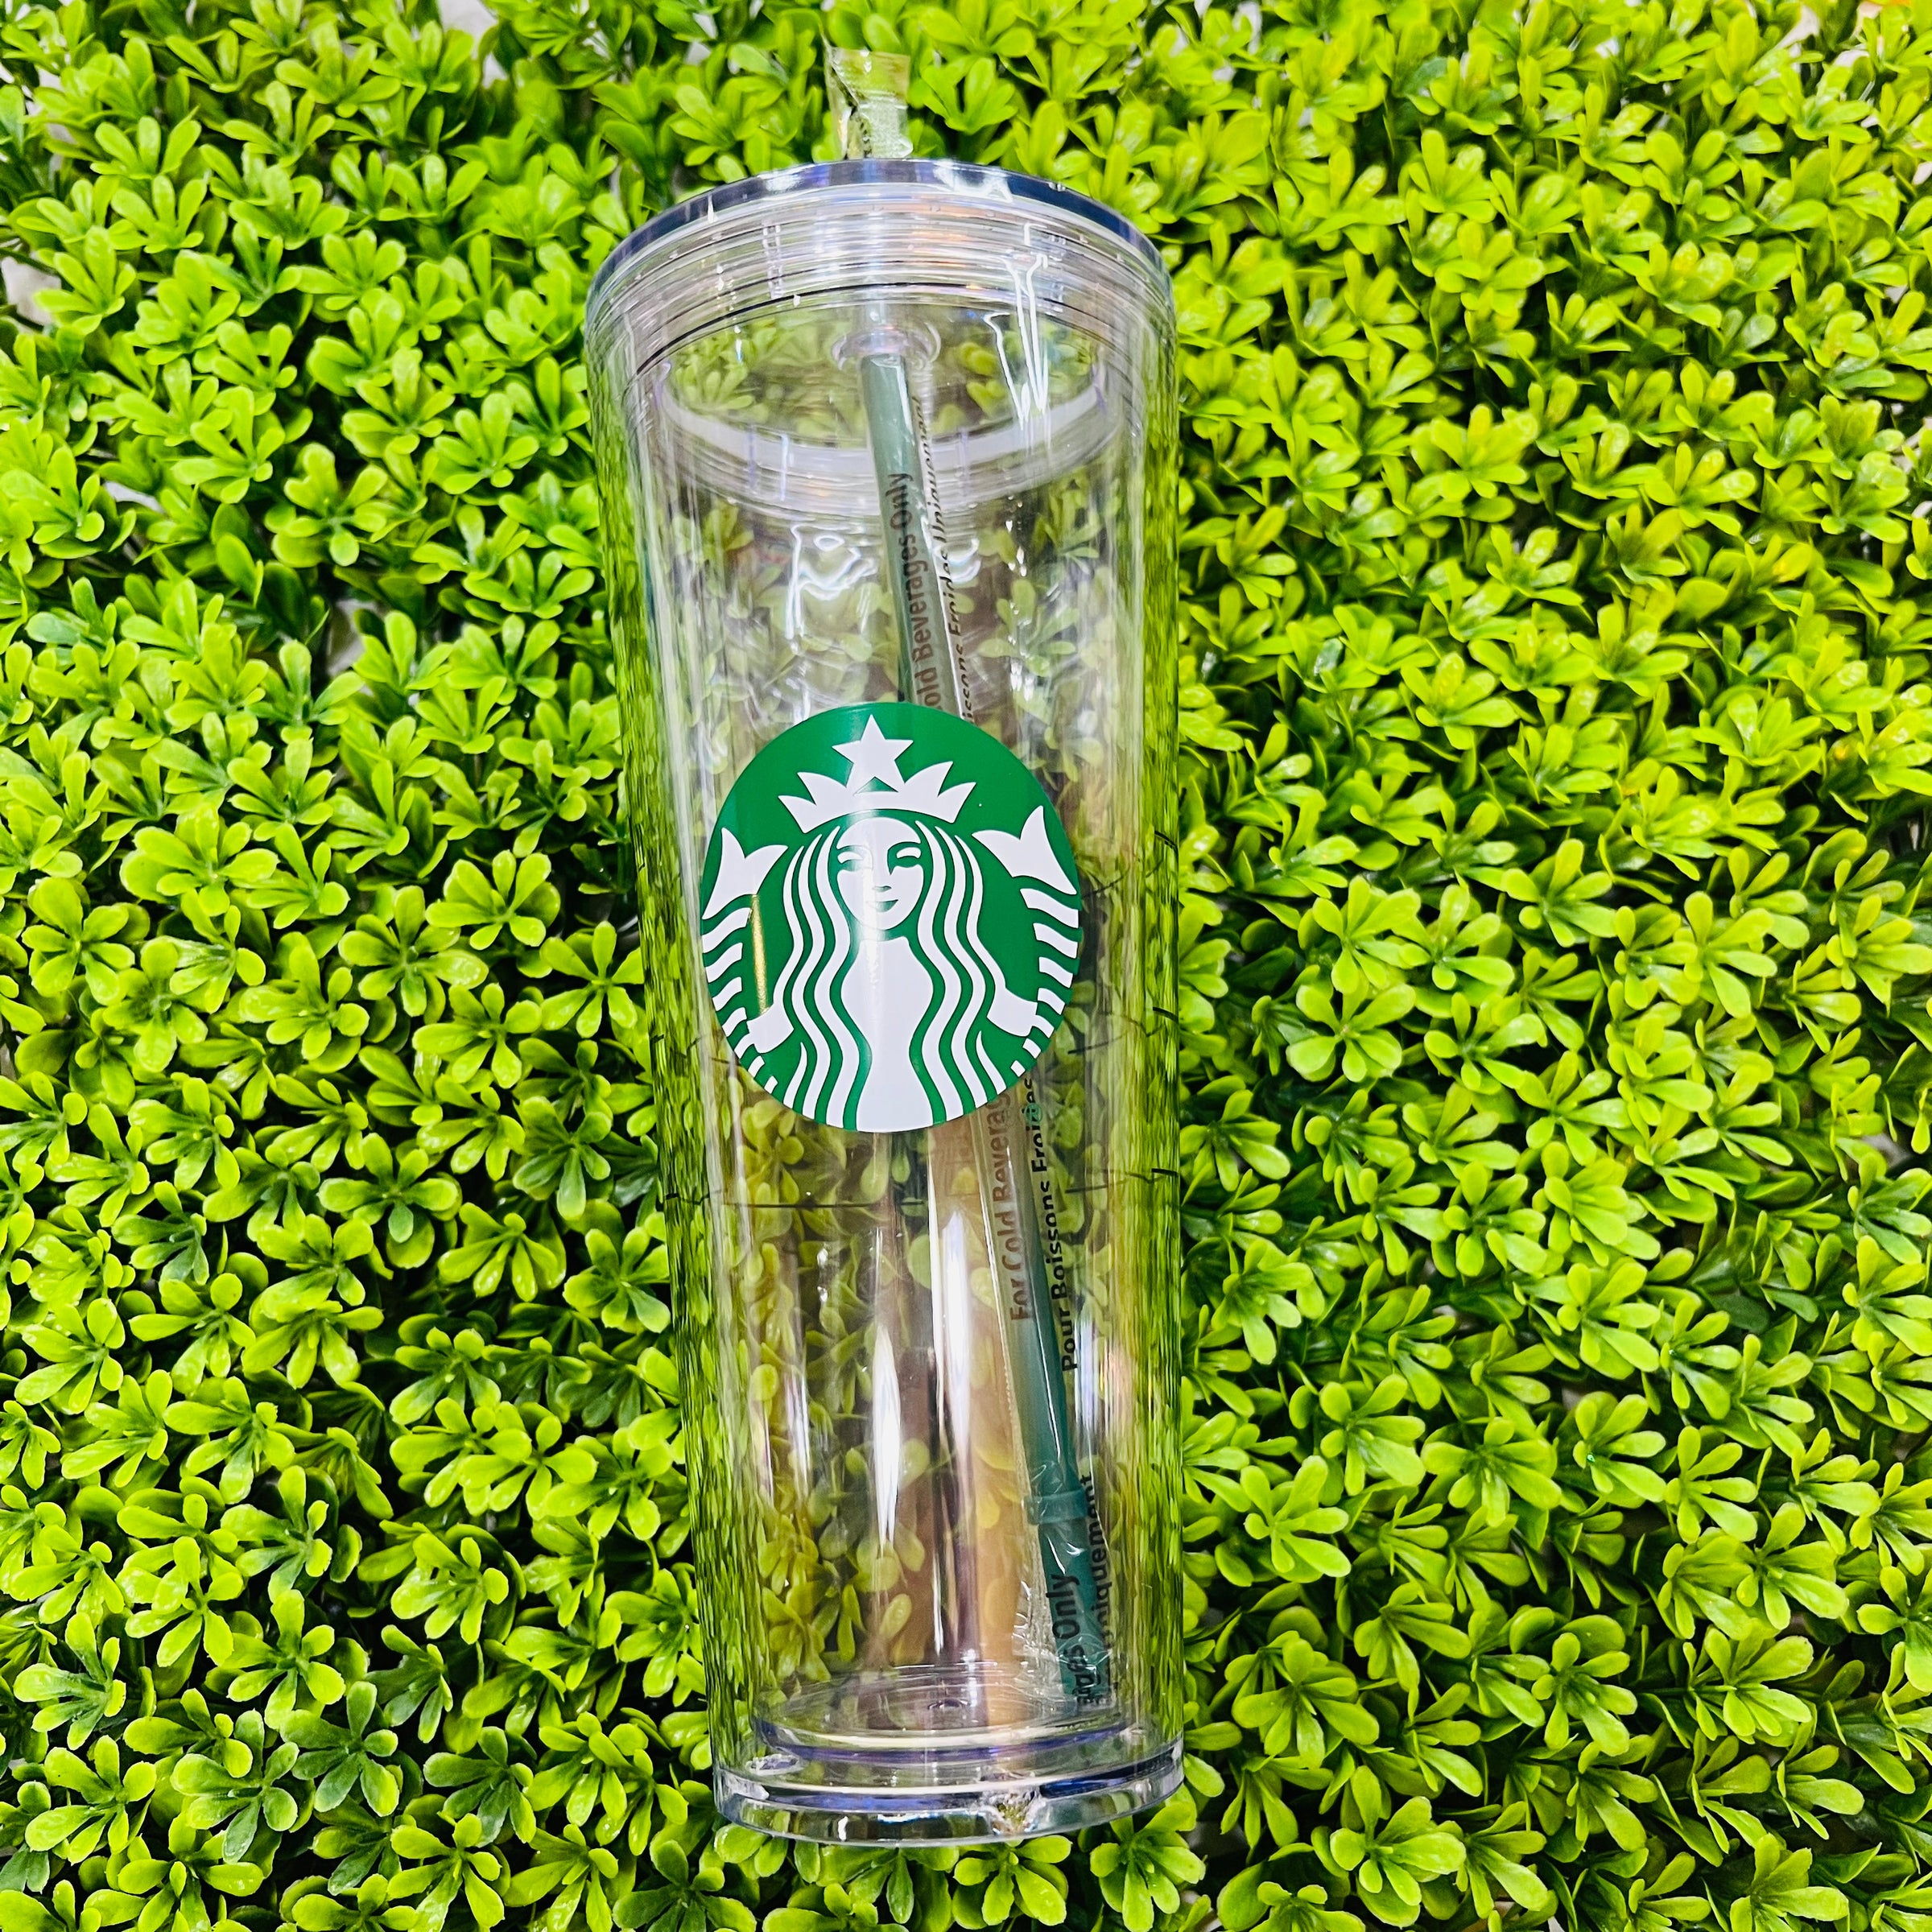 Starbucks clear glass tumbler